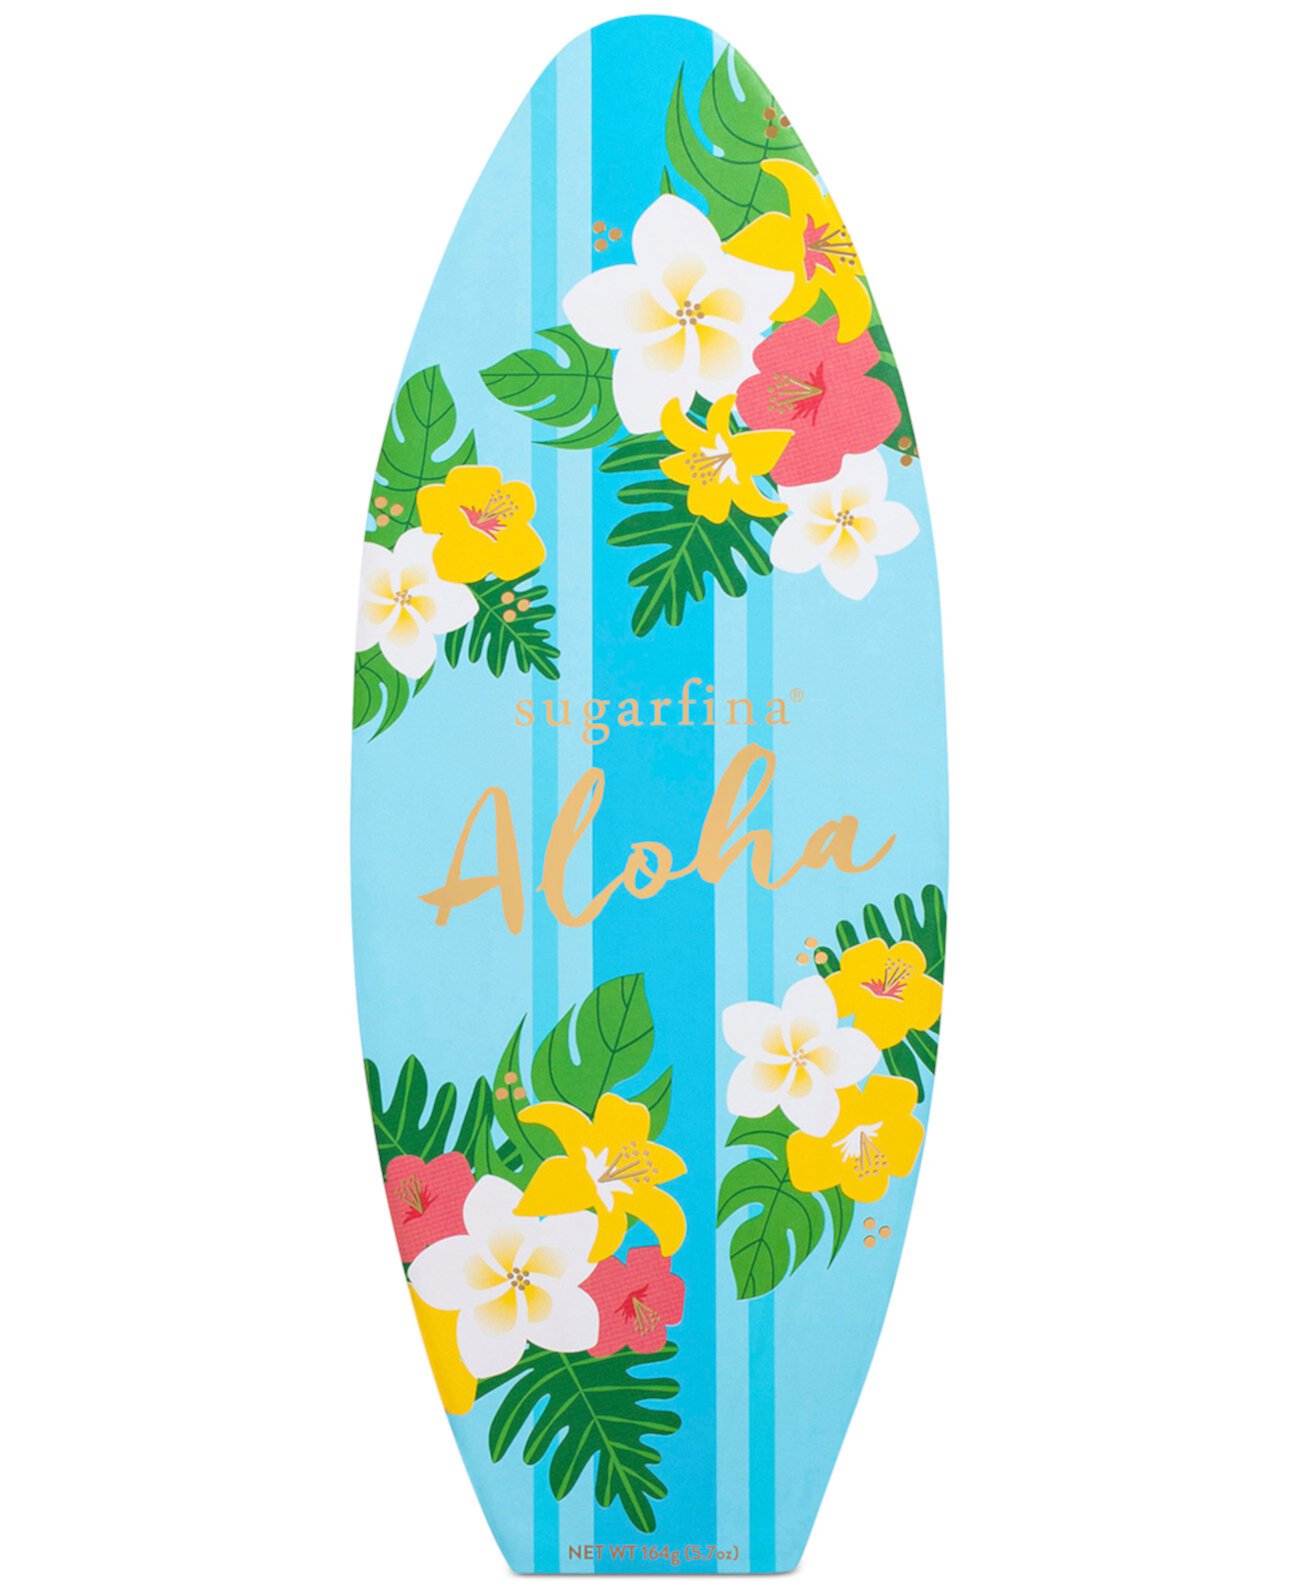 Aloha Surfboard Bento Box SUGARFINA